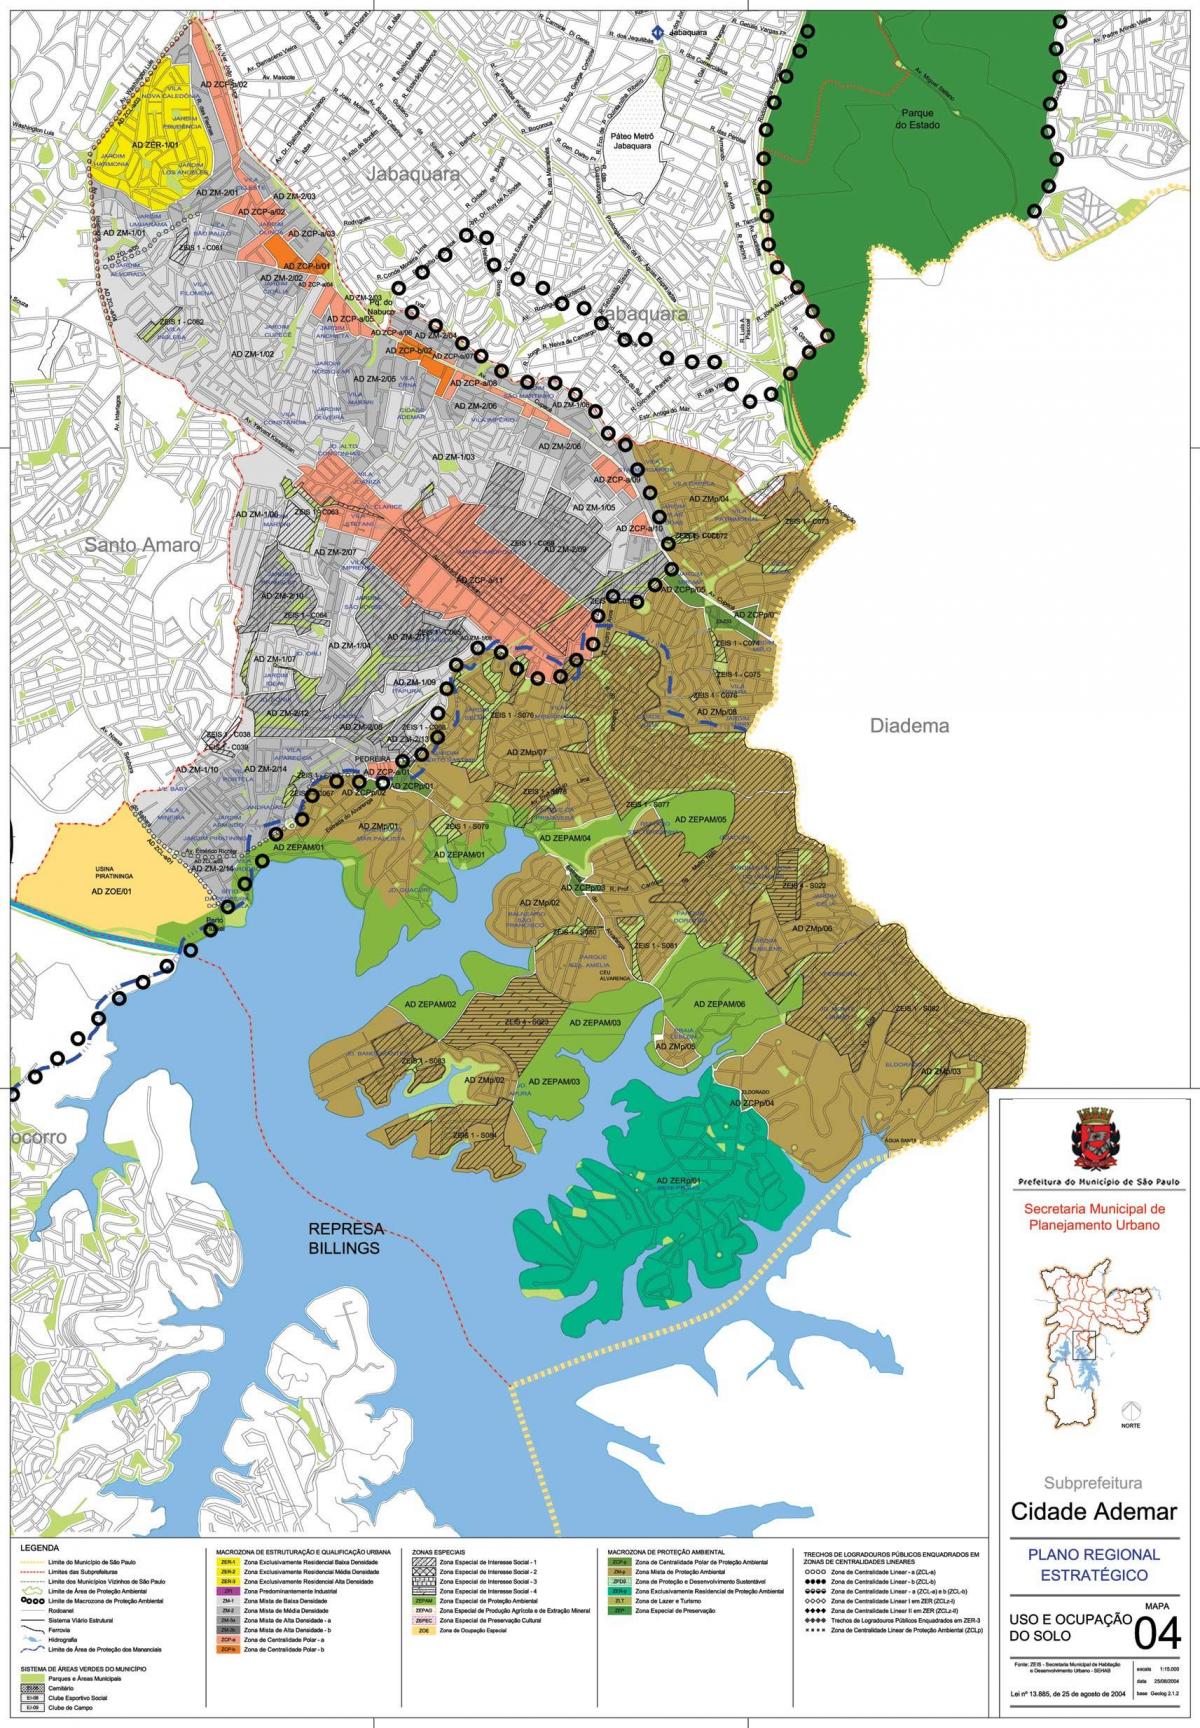 Peta Kota Ademar São Paulo - Pekerjaan tanah